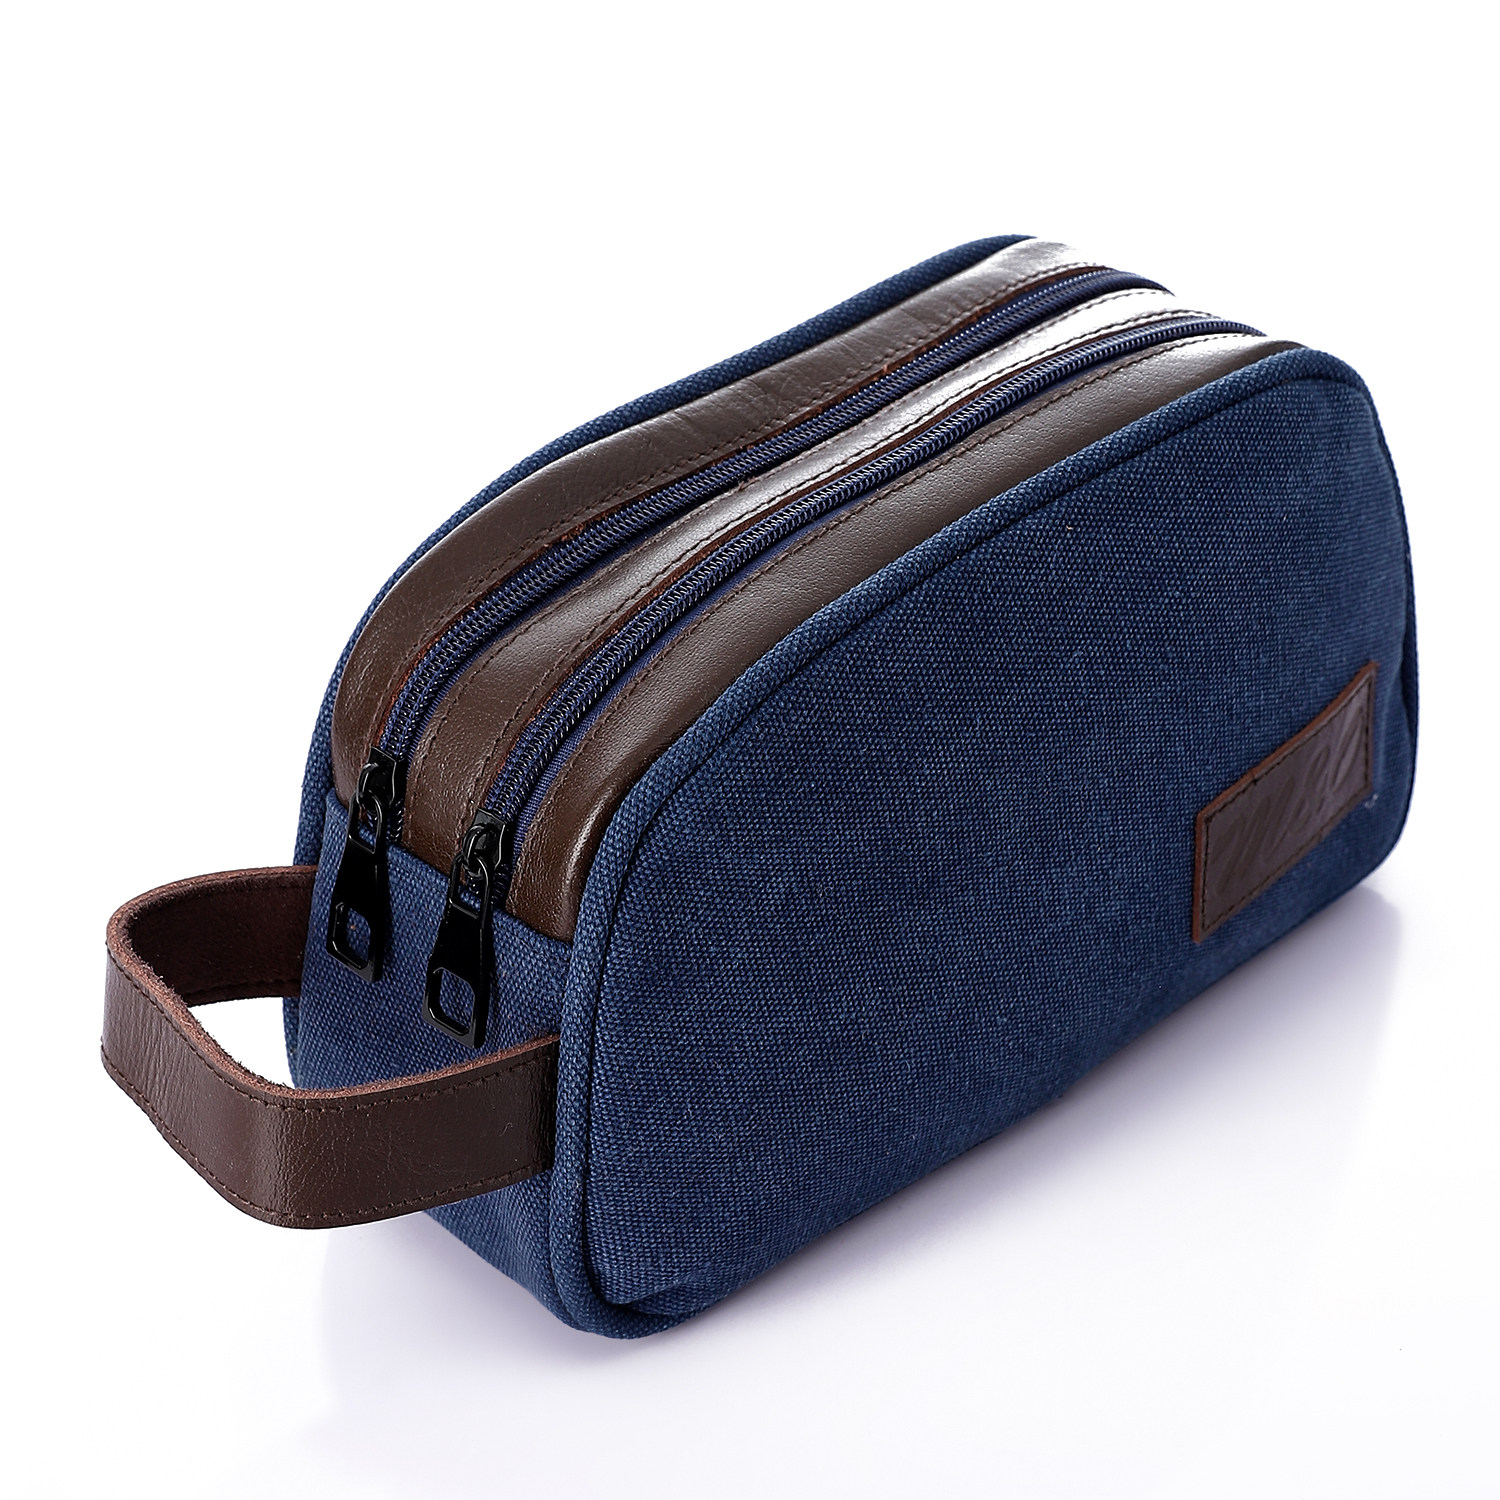 M&O Linen And Genuine Leather Clutch Handbag - Navy Blue